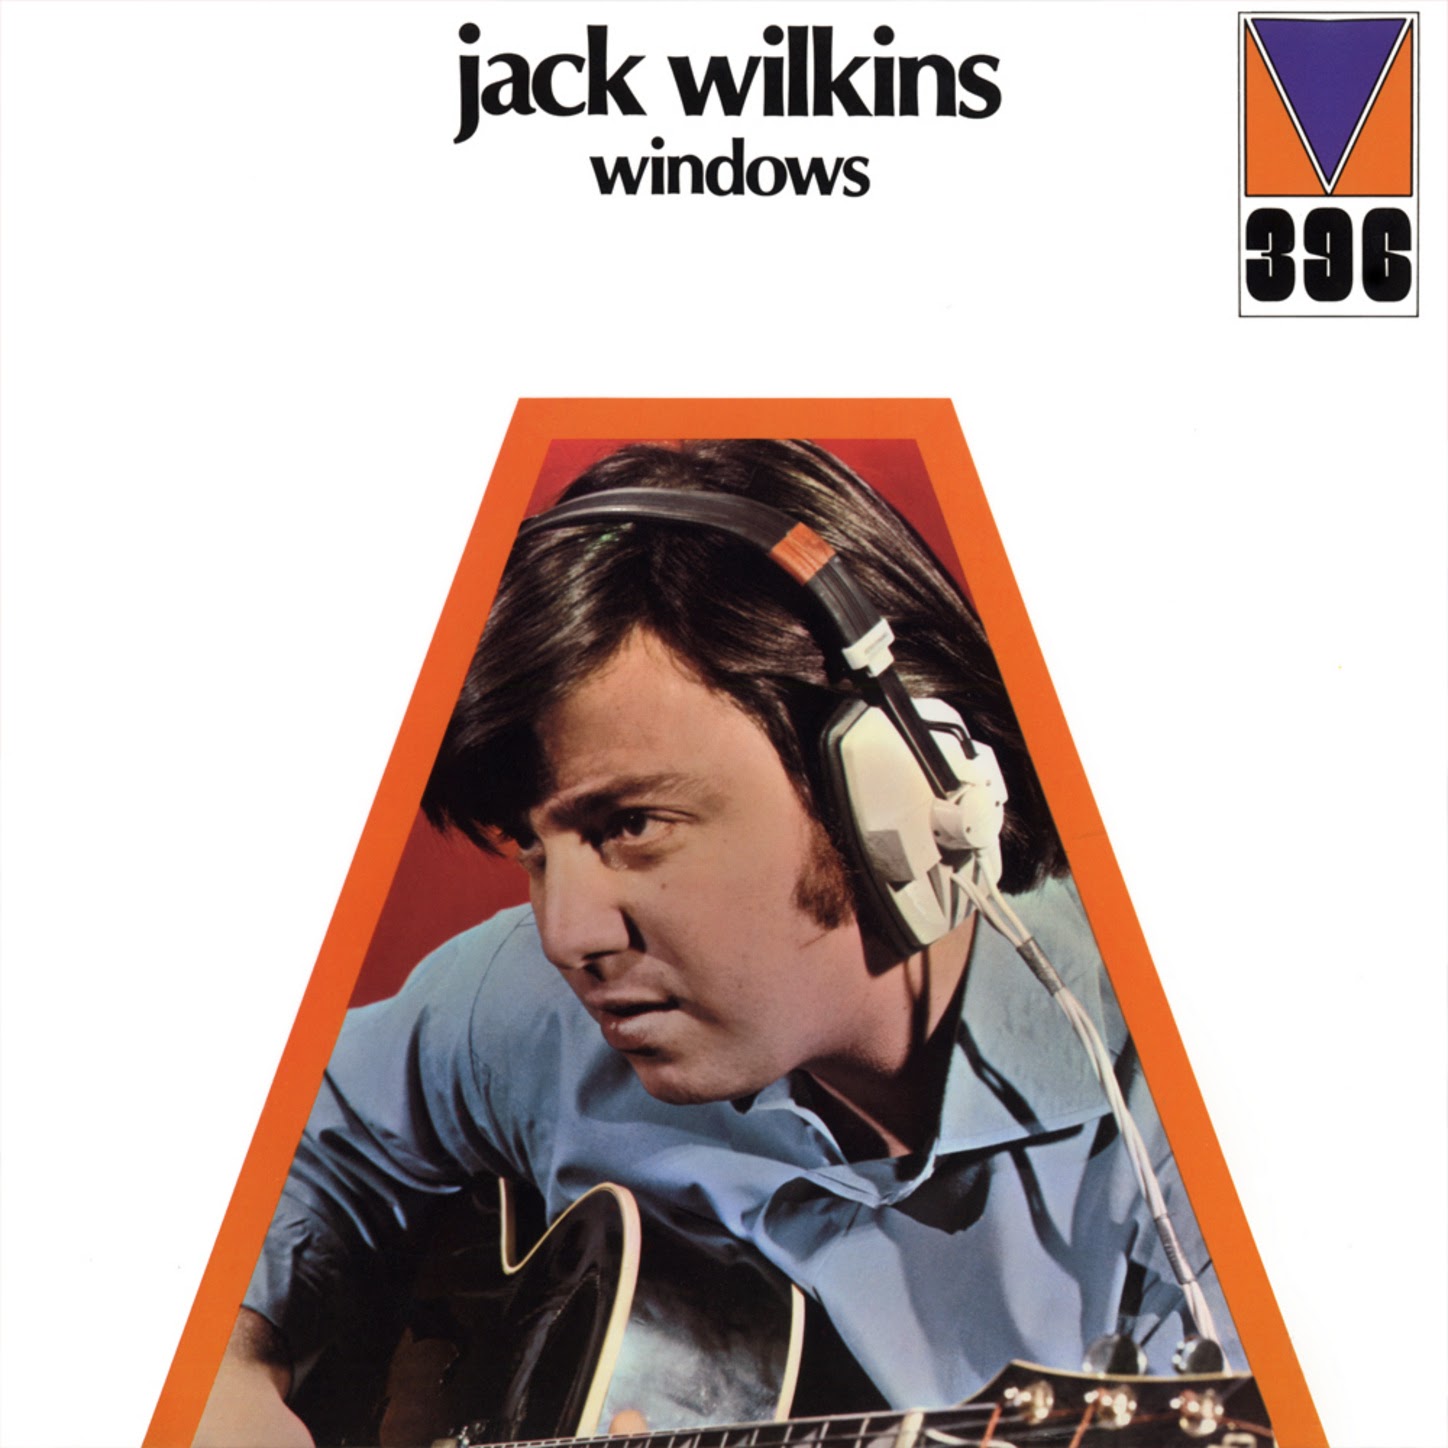 JACK WILKINS (GUITAR) - Windows cover 